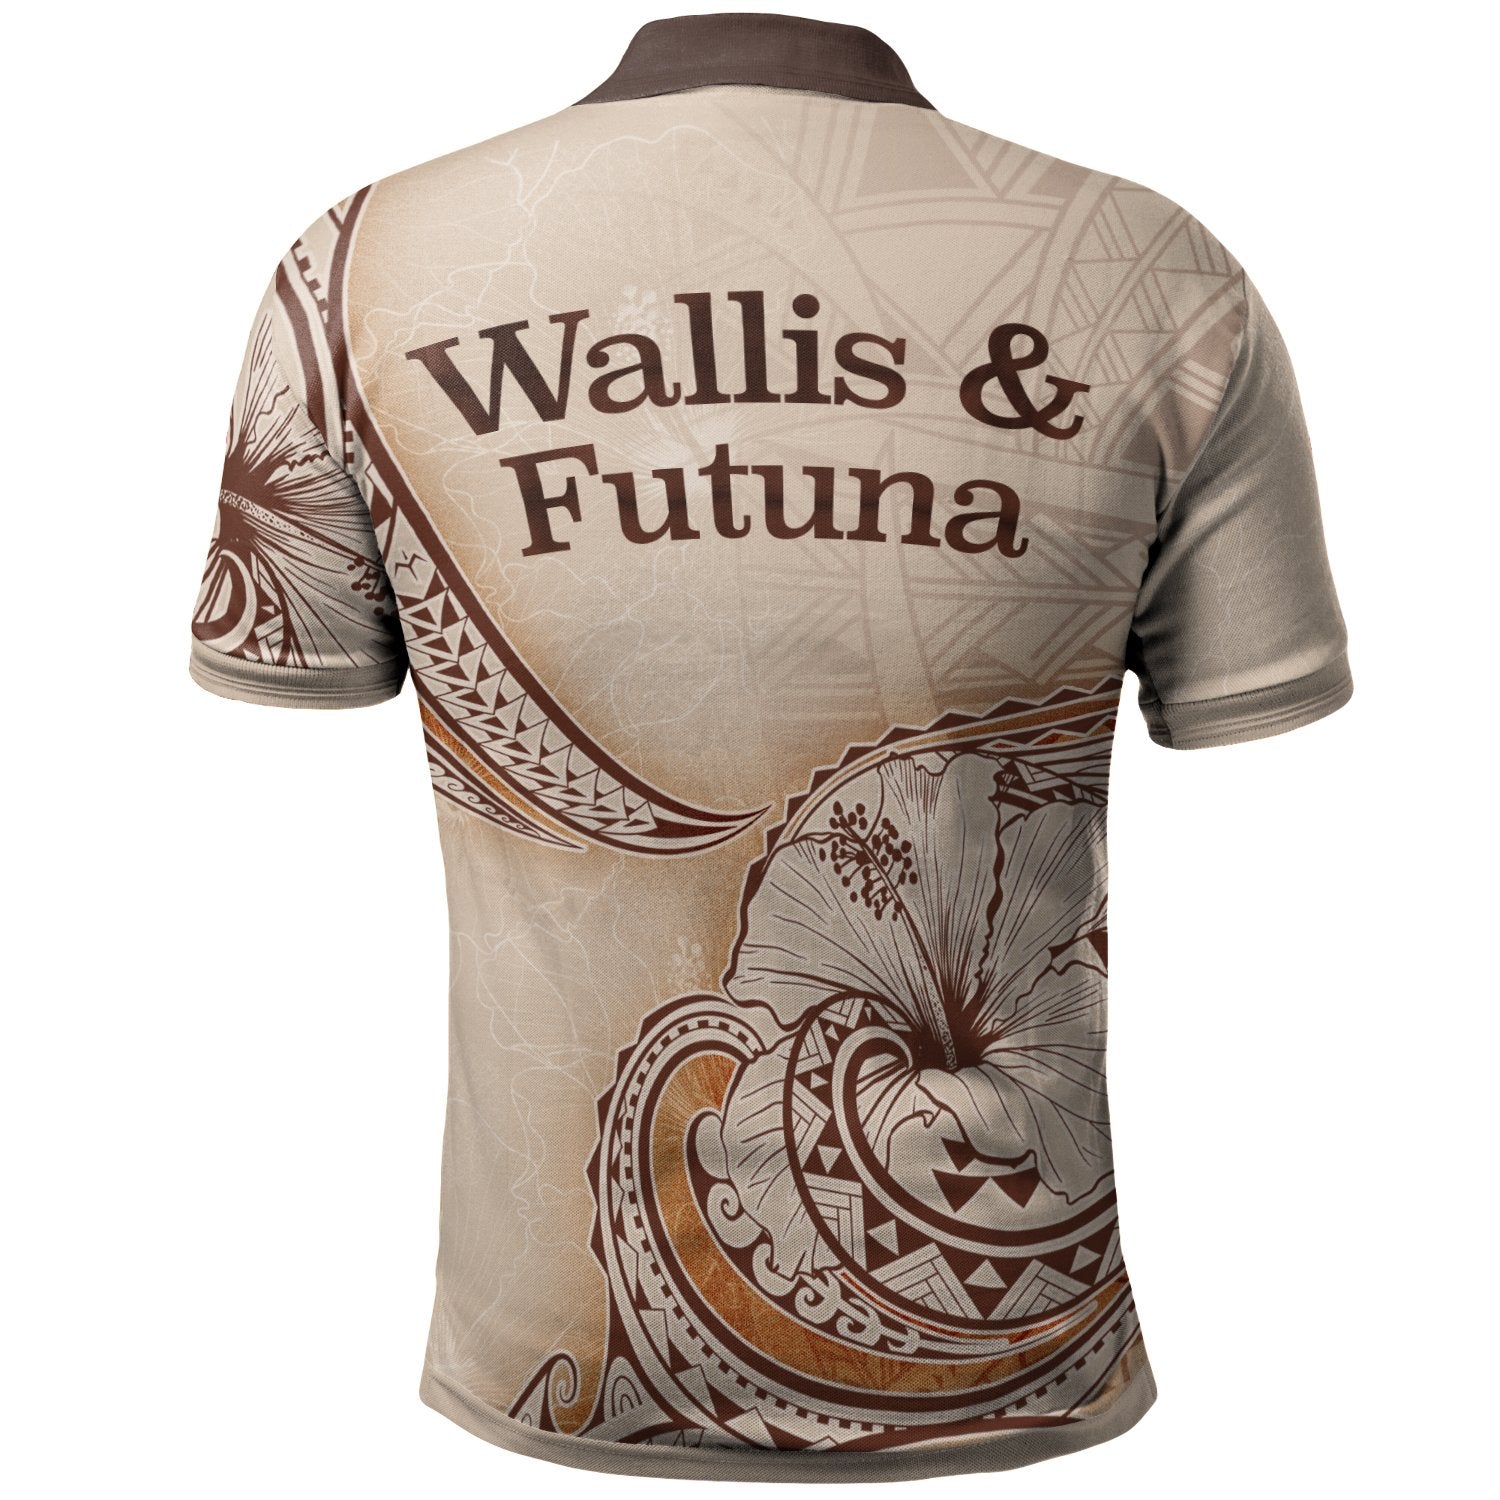 wallis-and-futuna-polo-shirt-hibiscus-flowers-vintage-style